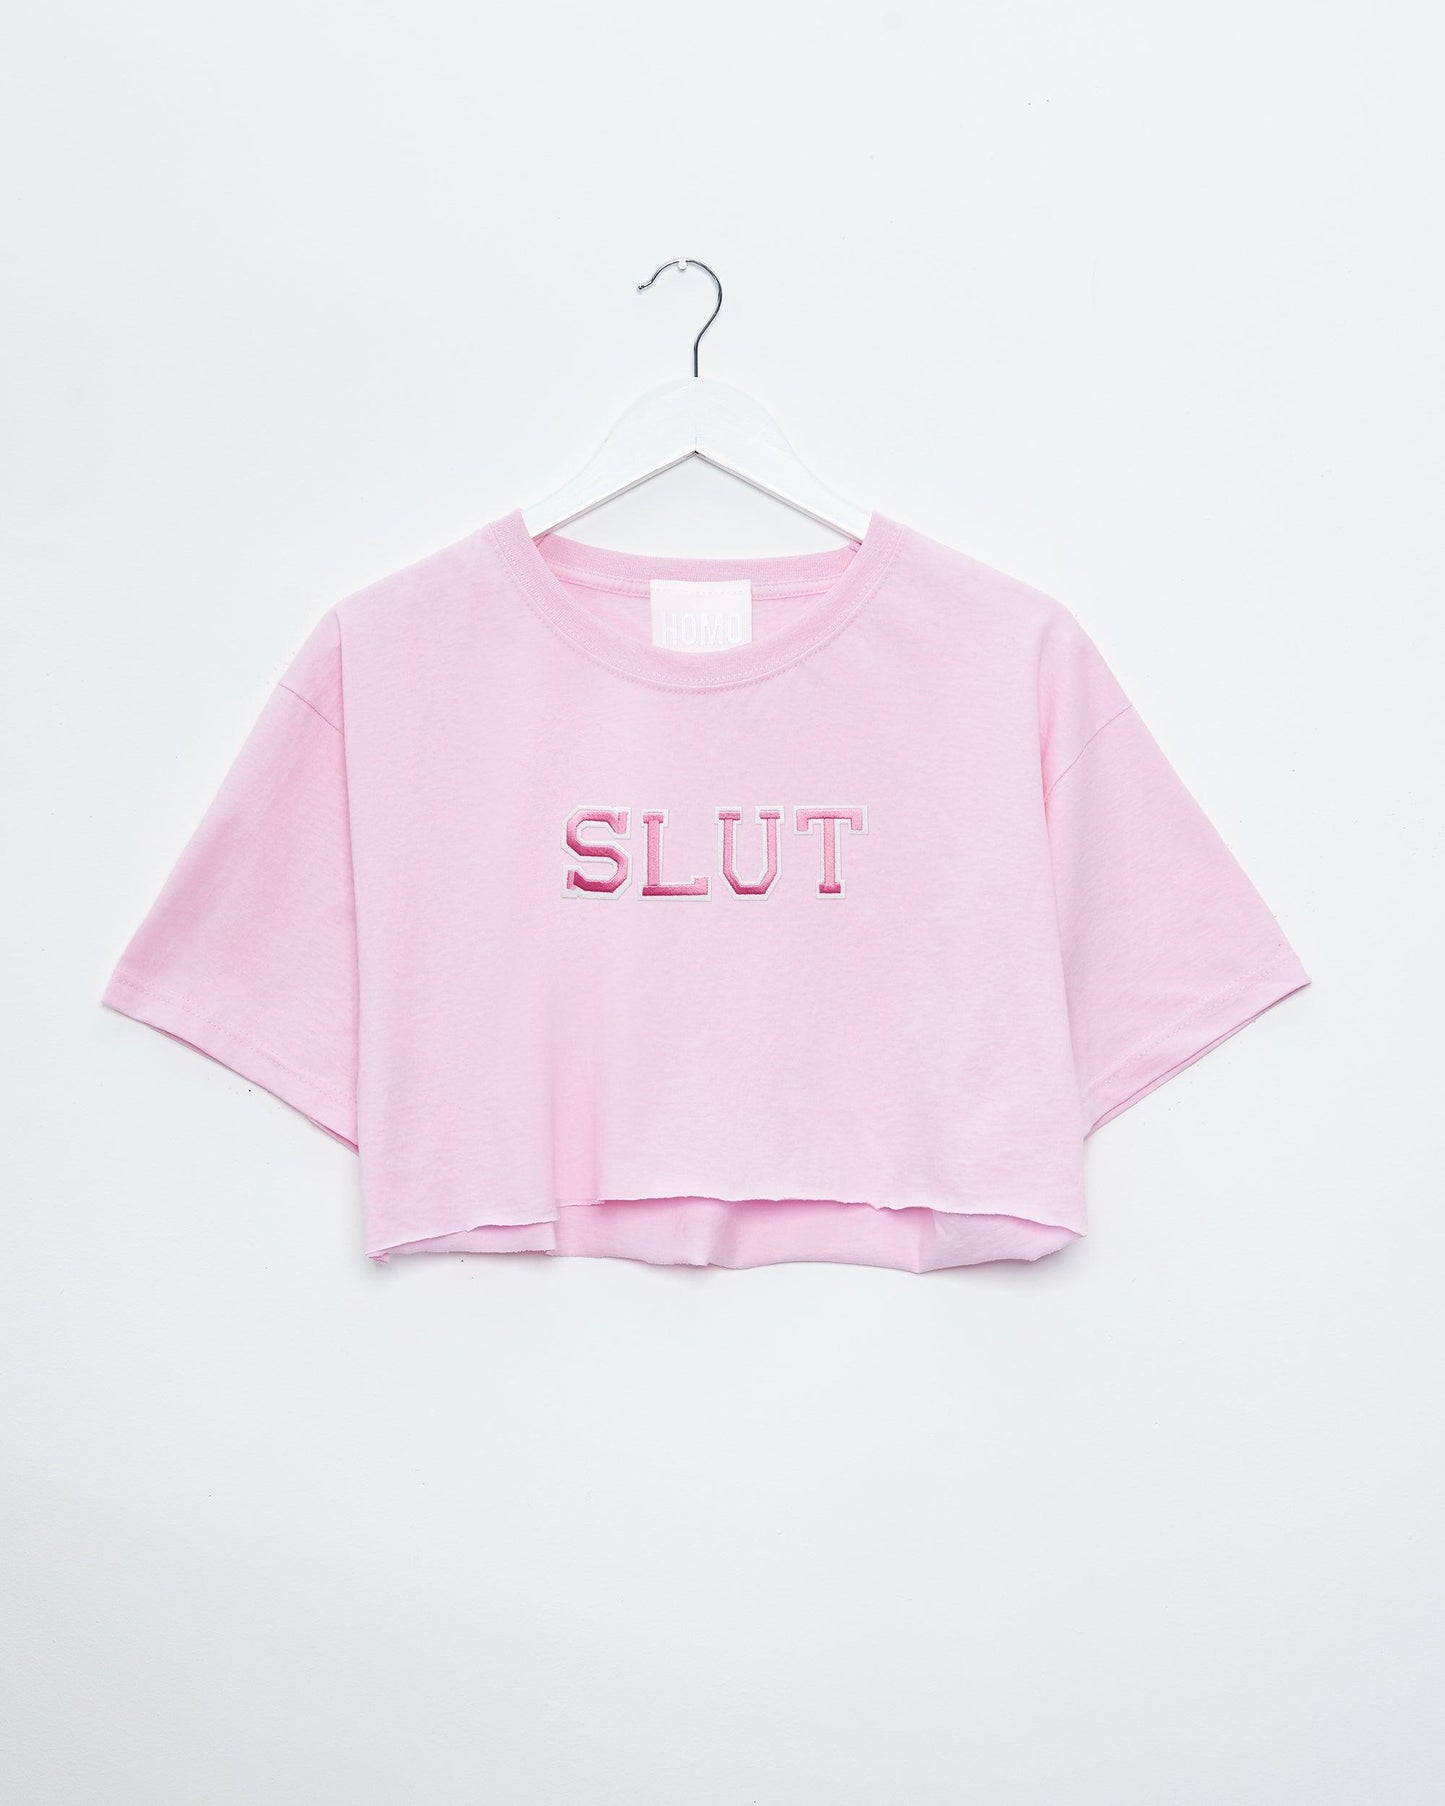 Varsity style slut embroidery on pink - crop top.